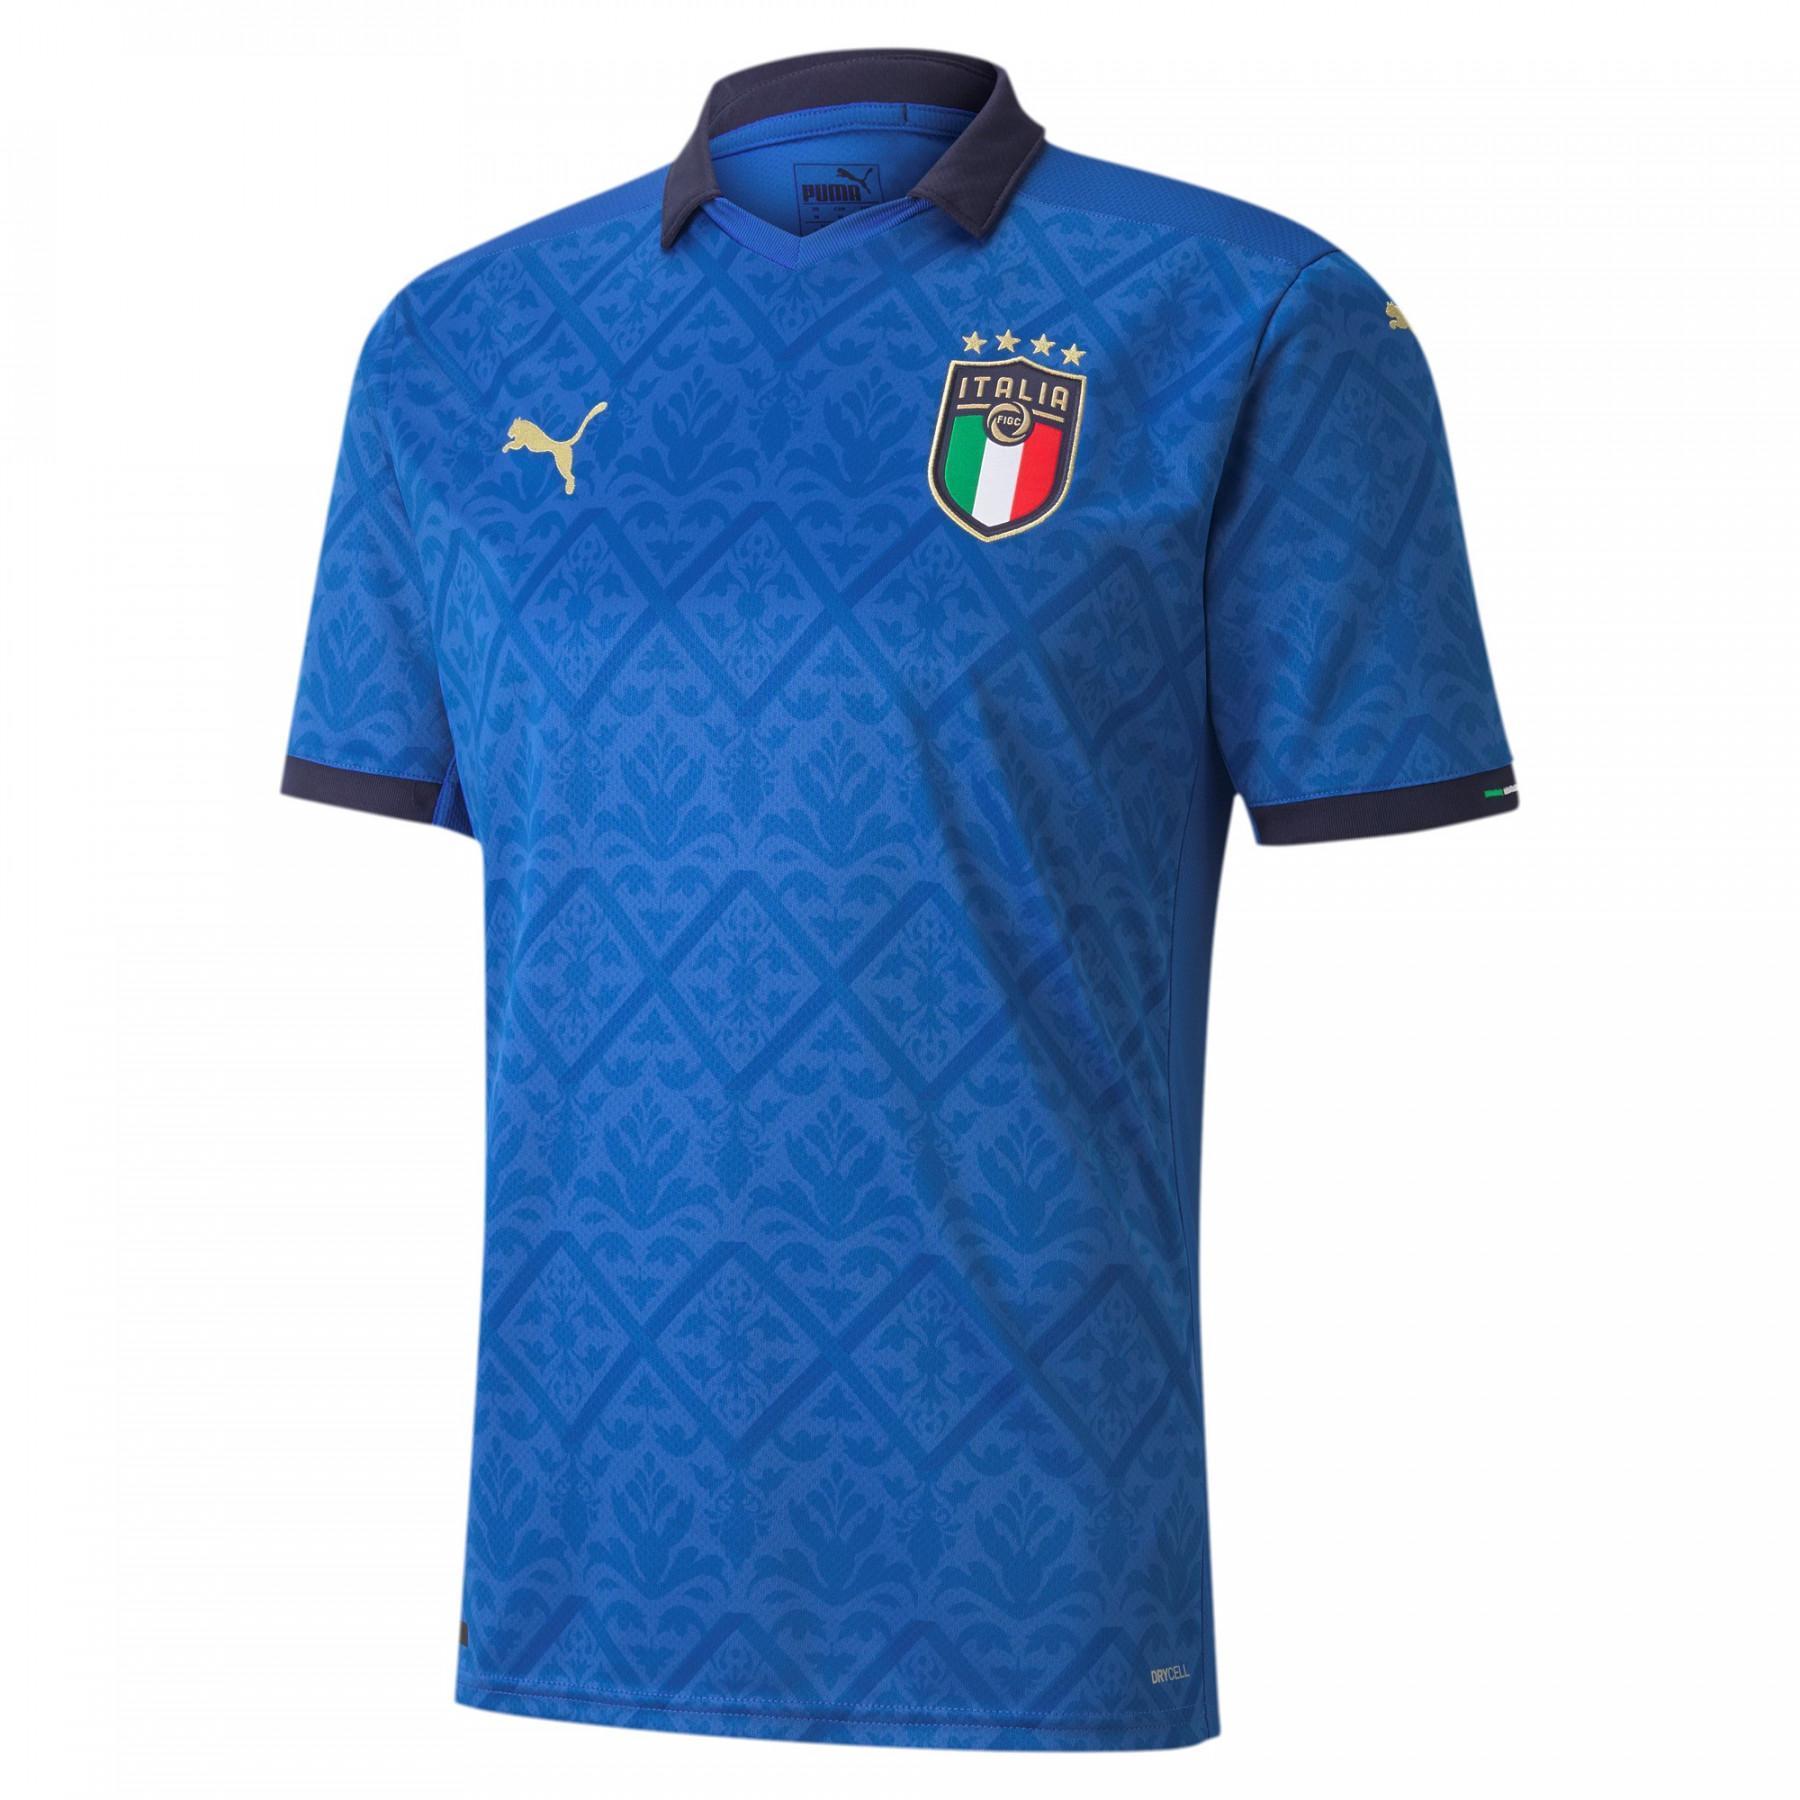 Home jersey child Italie 2020